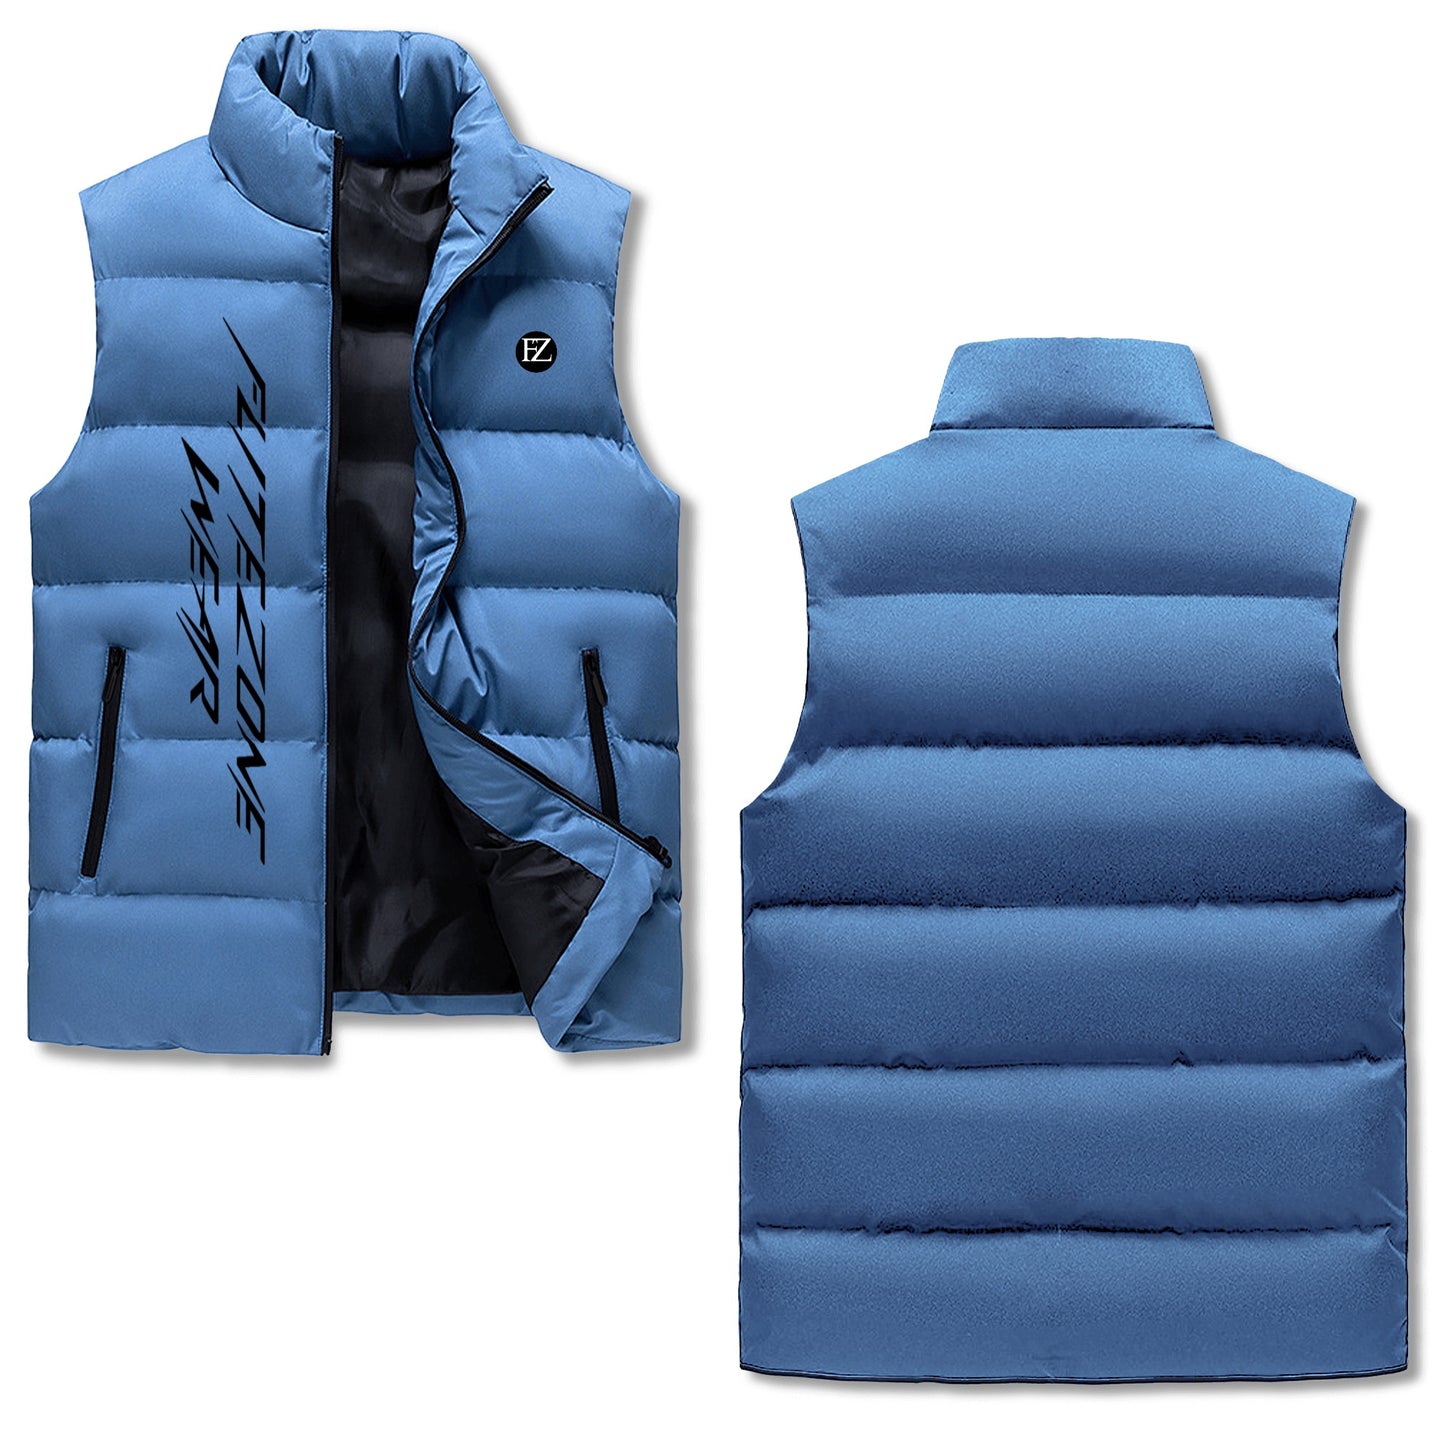 FZ Men's Warm Stand Collar Zip Up Puffer Jacket